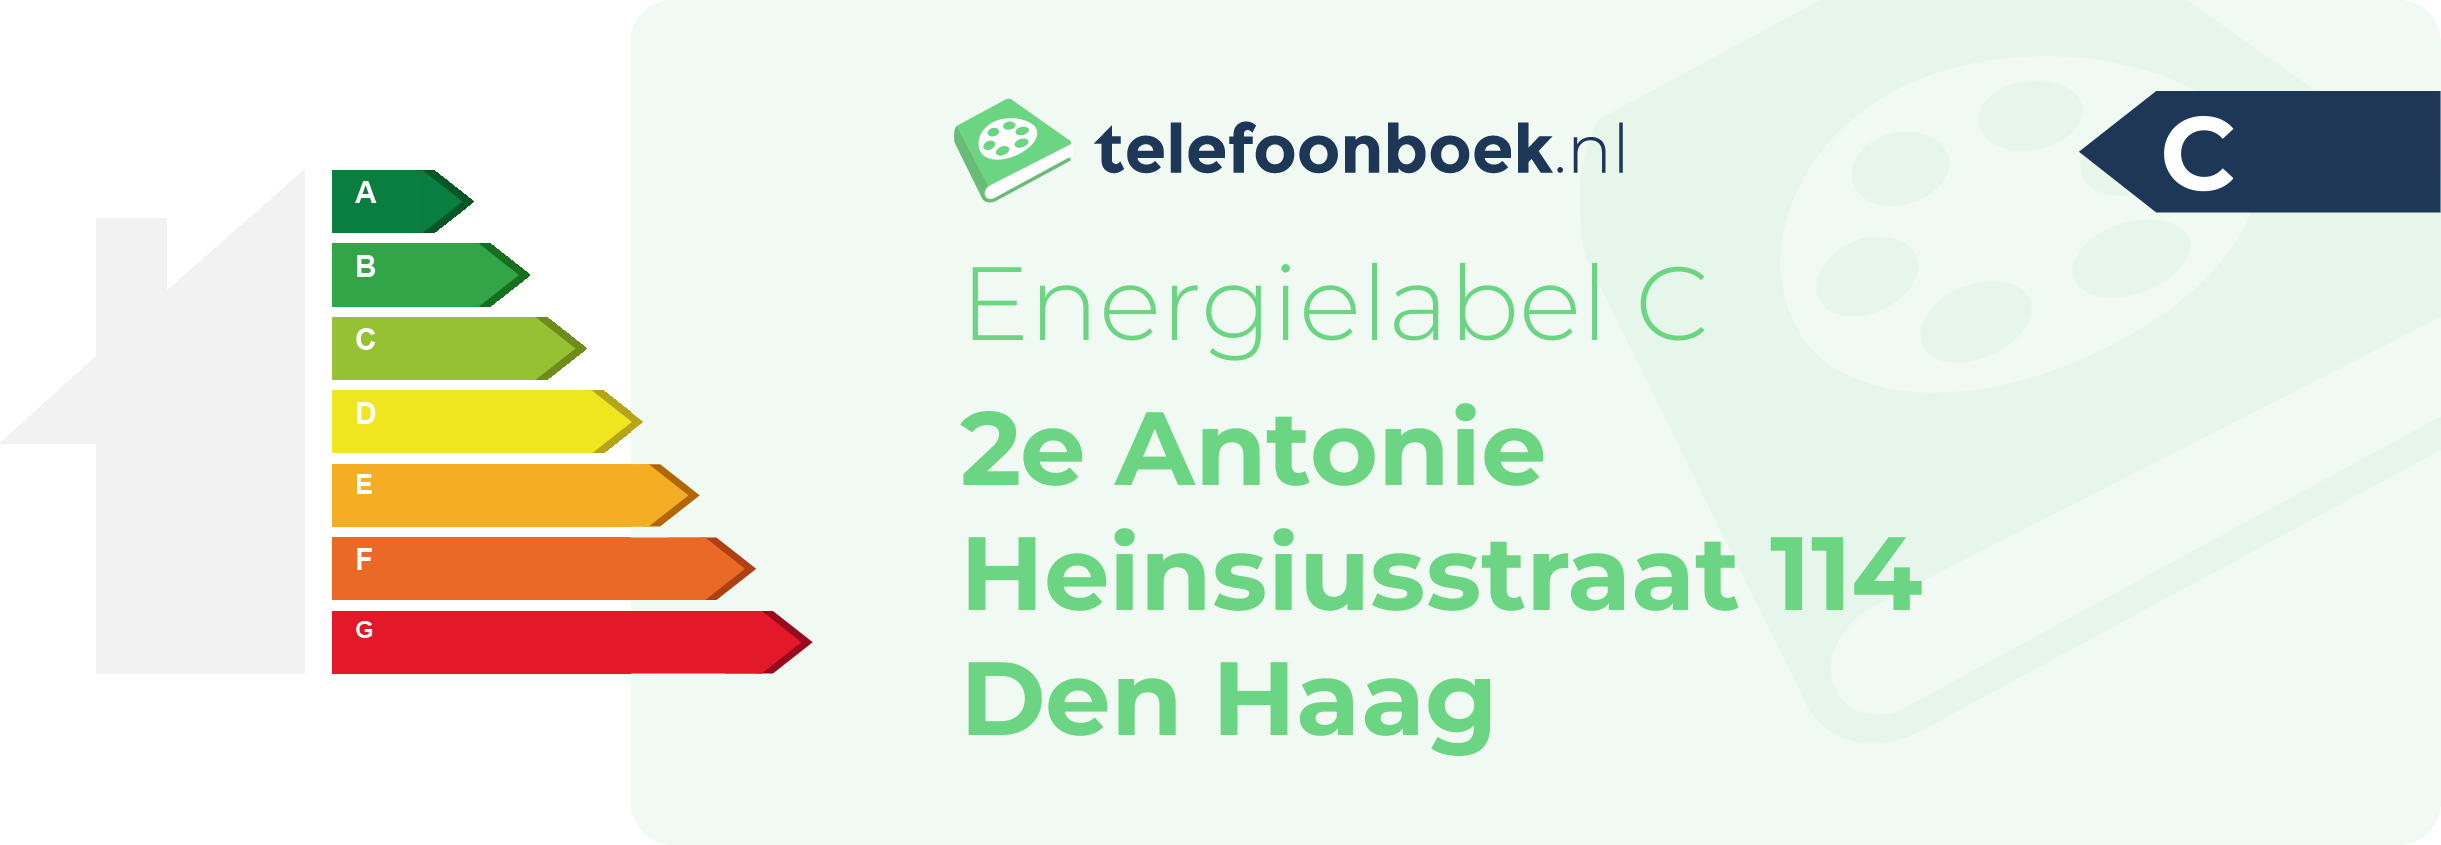 Energielabel 2e Antonie Heinsiusstraat 114 Den Haag